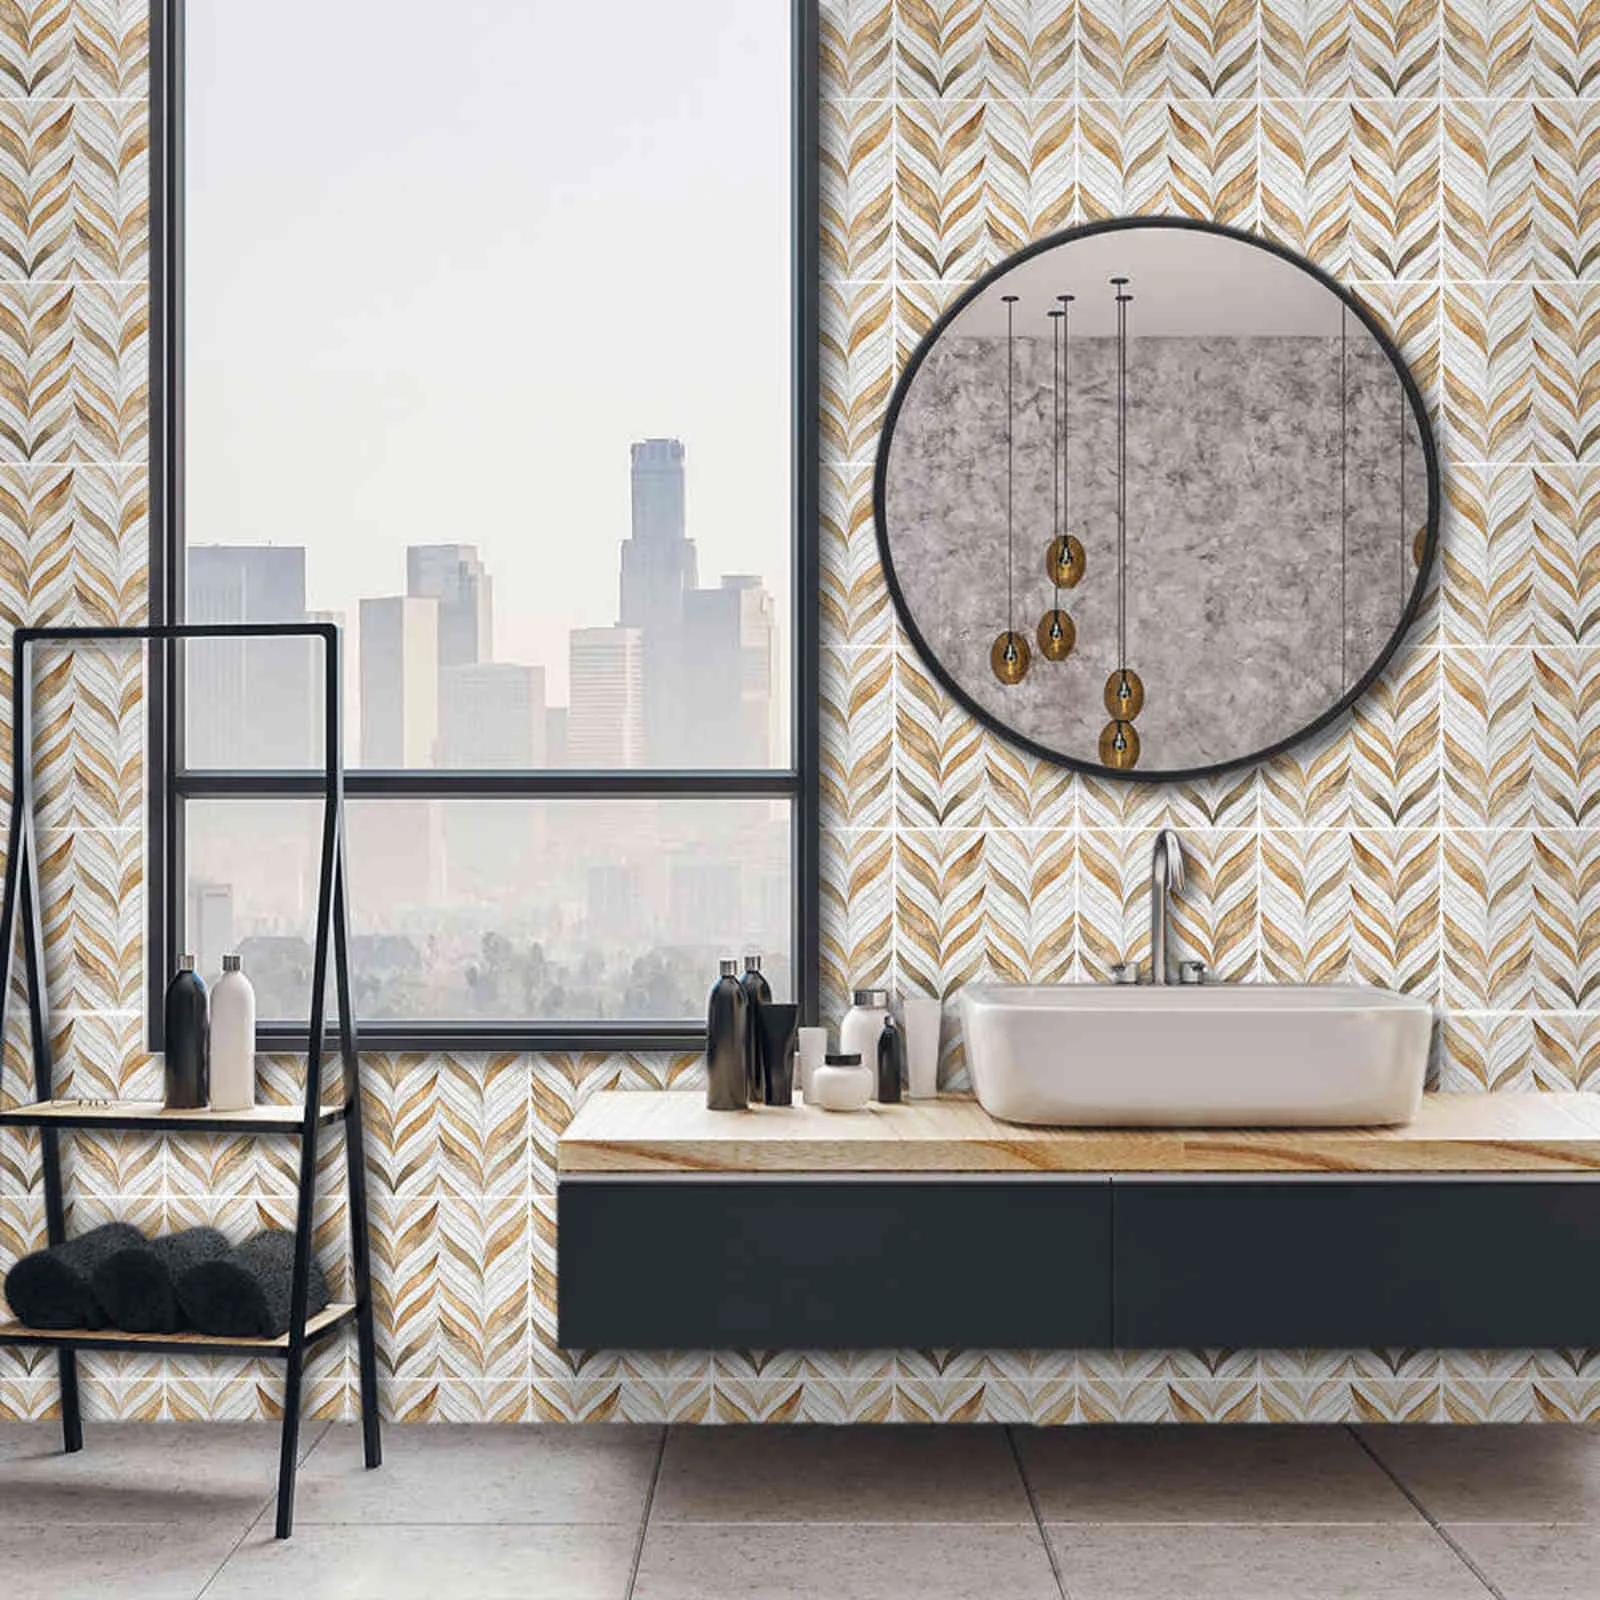 Funlife Copper Metallic Plant Marble Wall Sticker Peel & Stick Decorative Tile Sticker for Bathroom Kitchen Backsplash Floor 211124